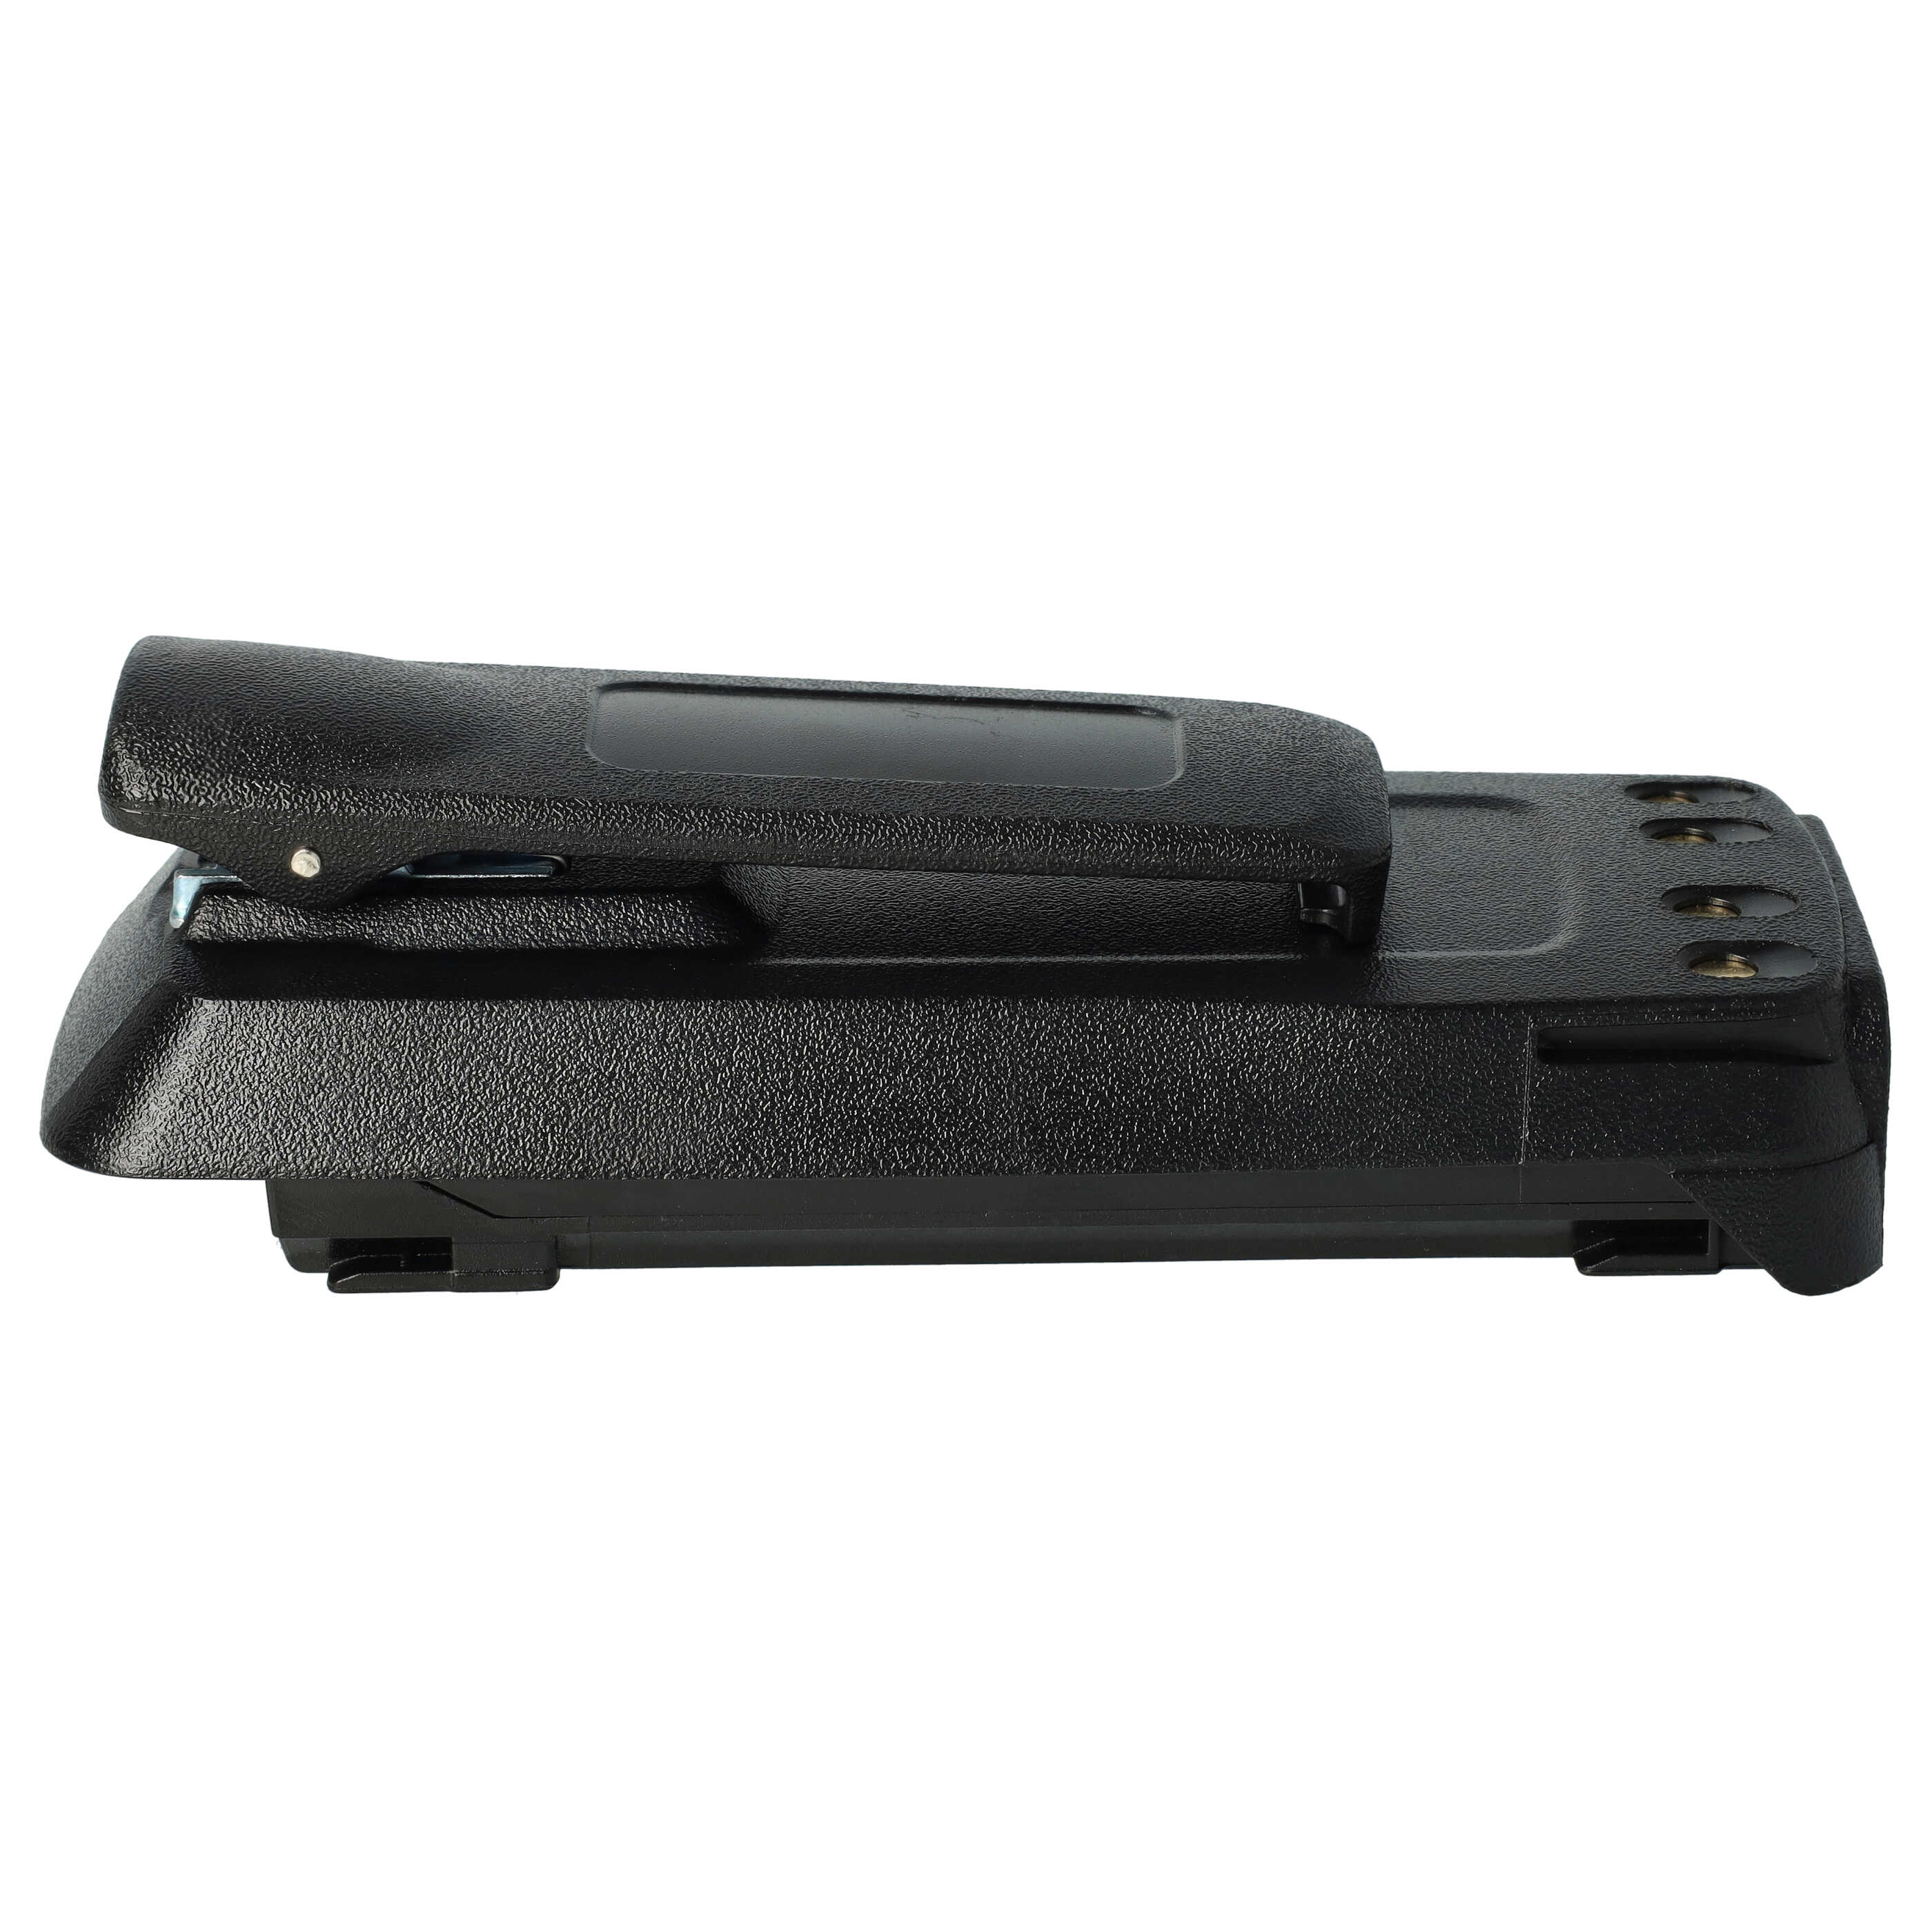 Akumulator do radiotelefonu zamiennik Motorola NNTN4066, NNTN4077 - 2600 mAh 7,4 V Li-Ion + klips na pasek